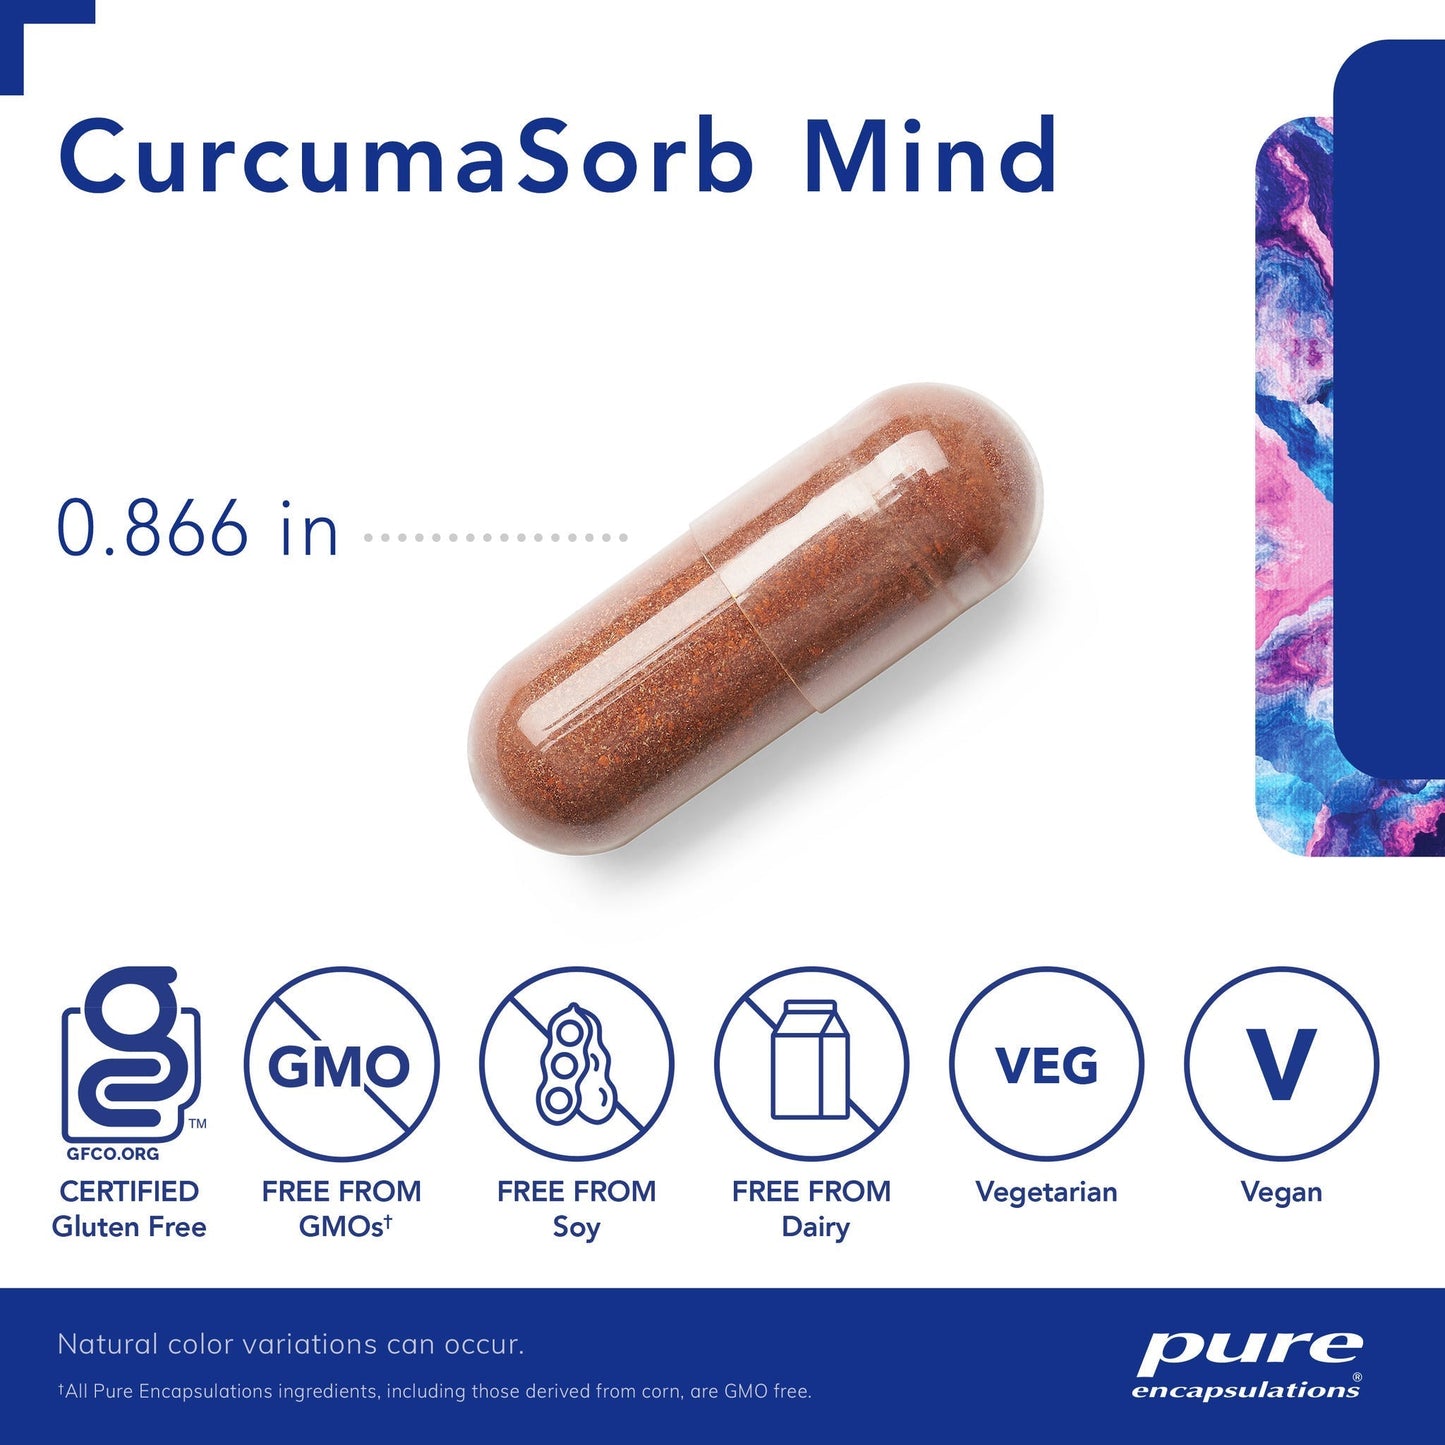 CurcumaSorb Mind